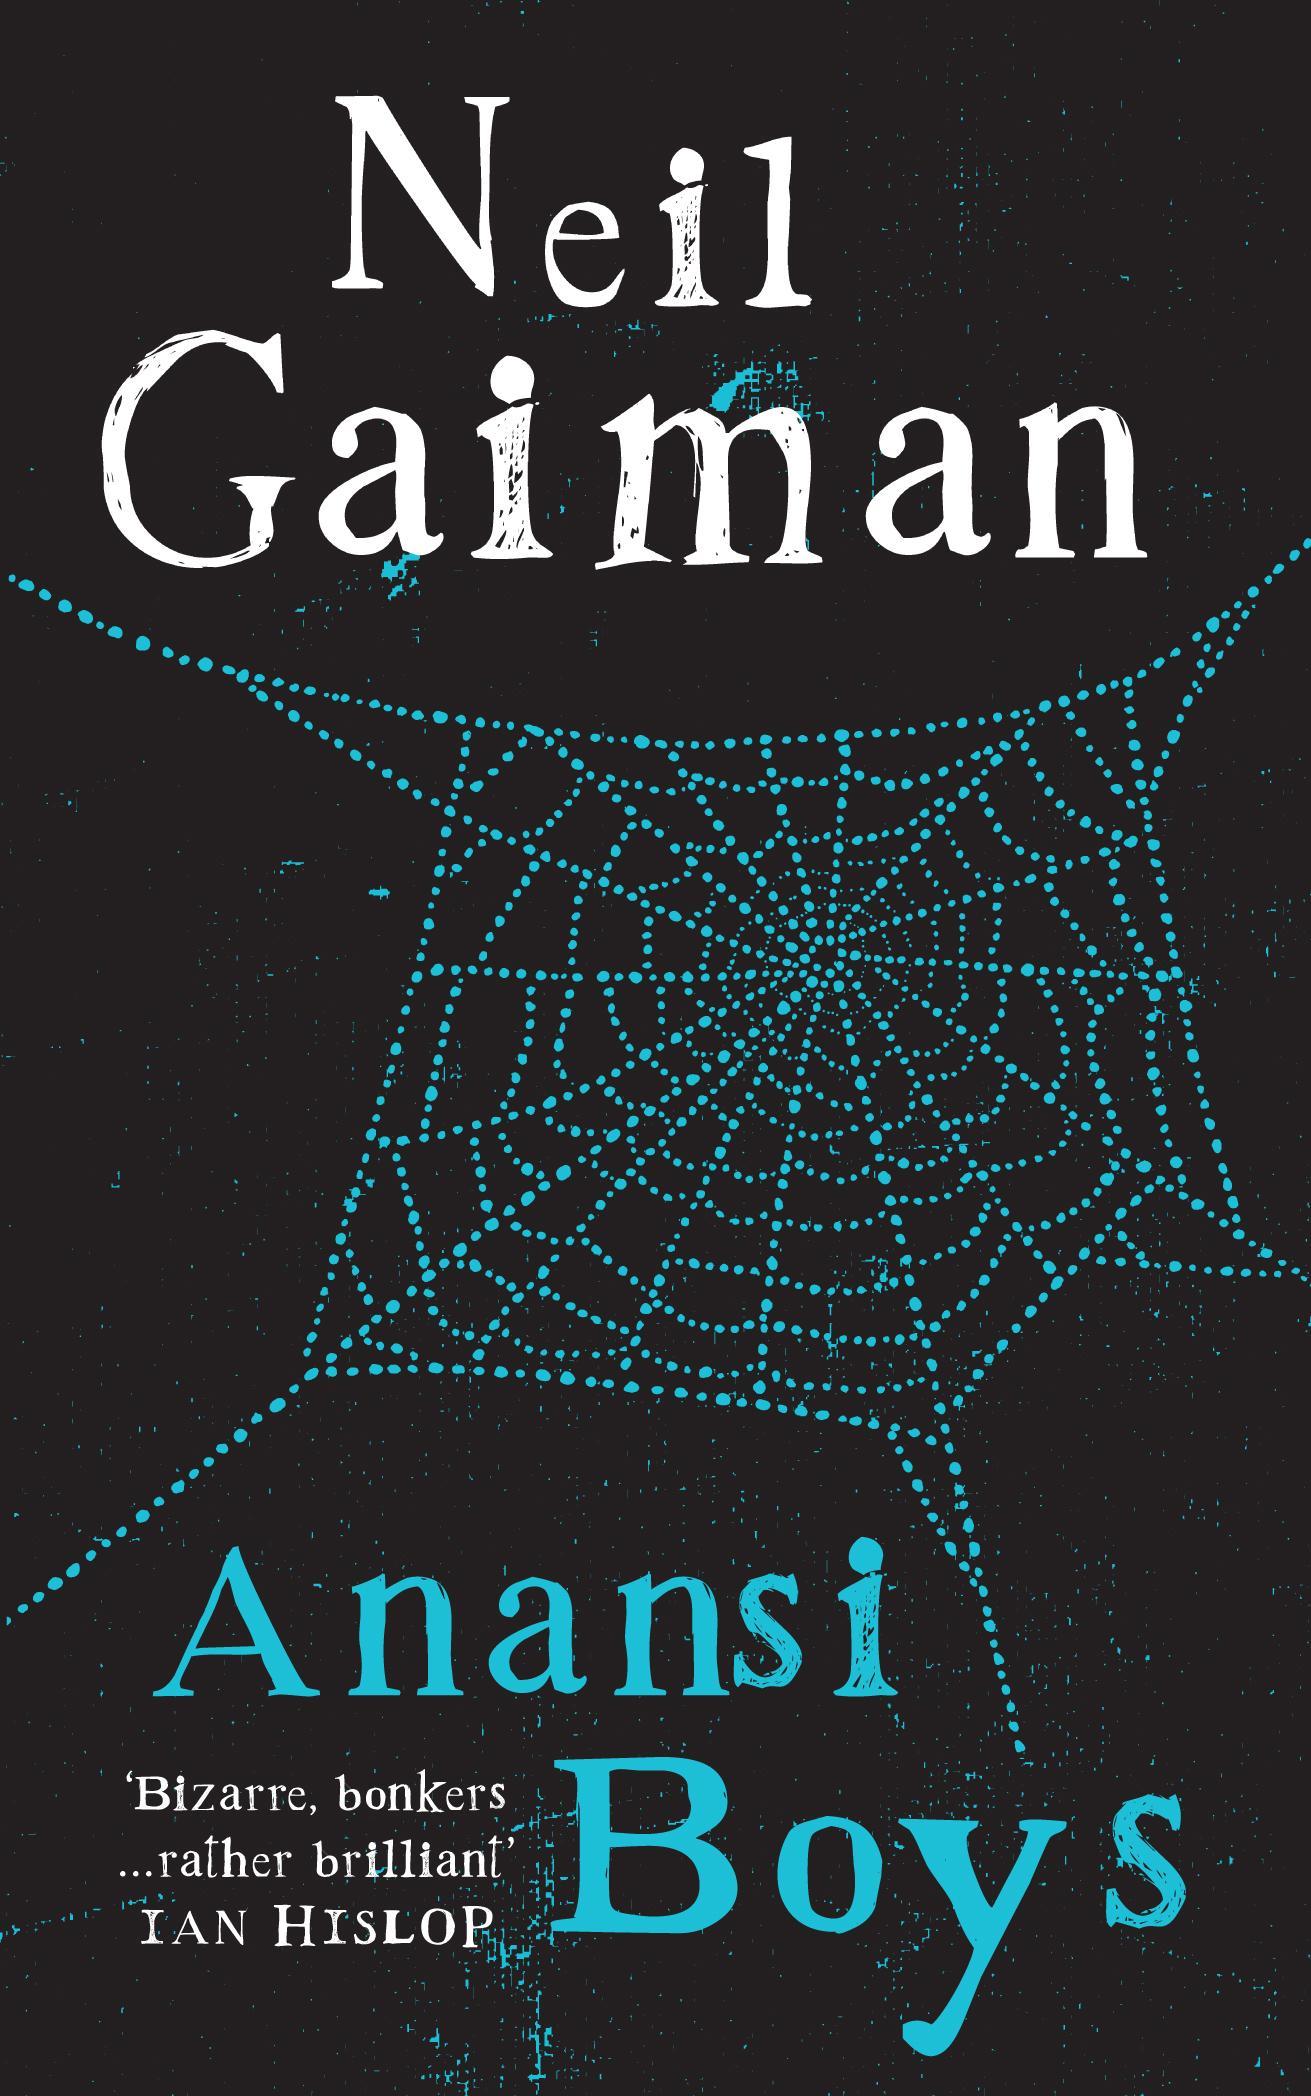 His life ended. Anansi boys Gaiman. Neil Gaiman books.